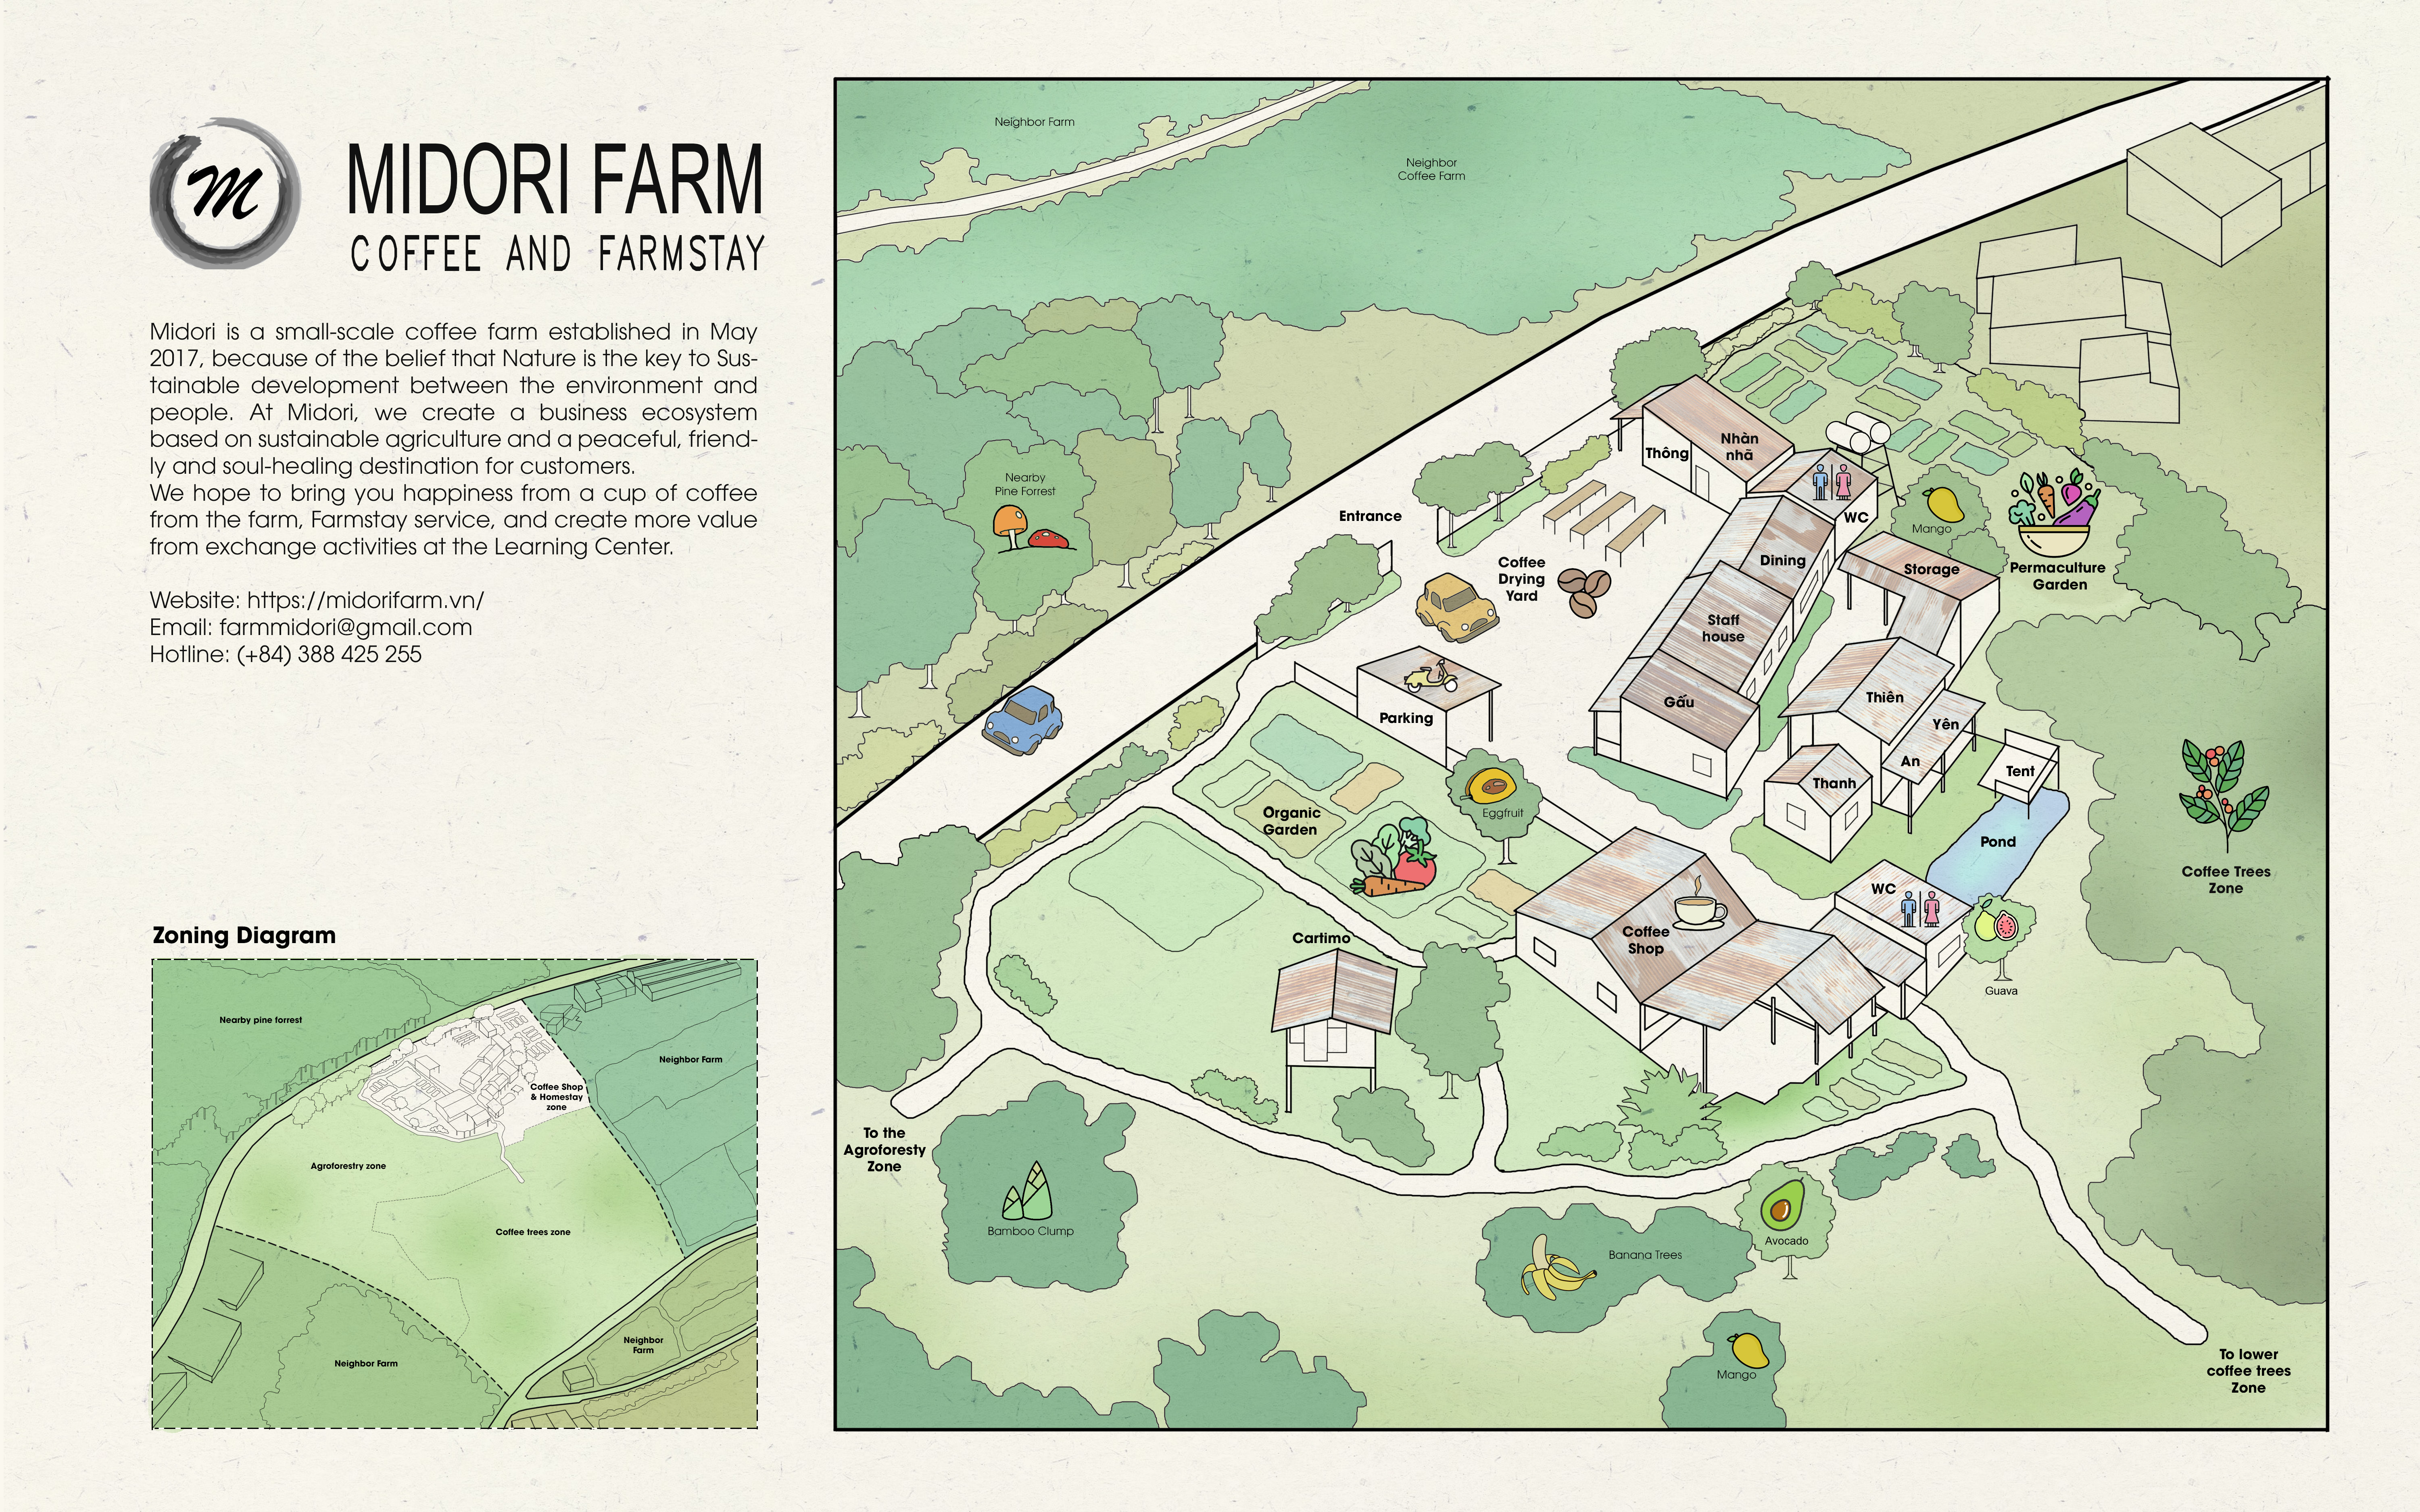 About Midori Farm